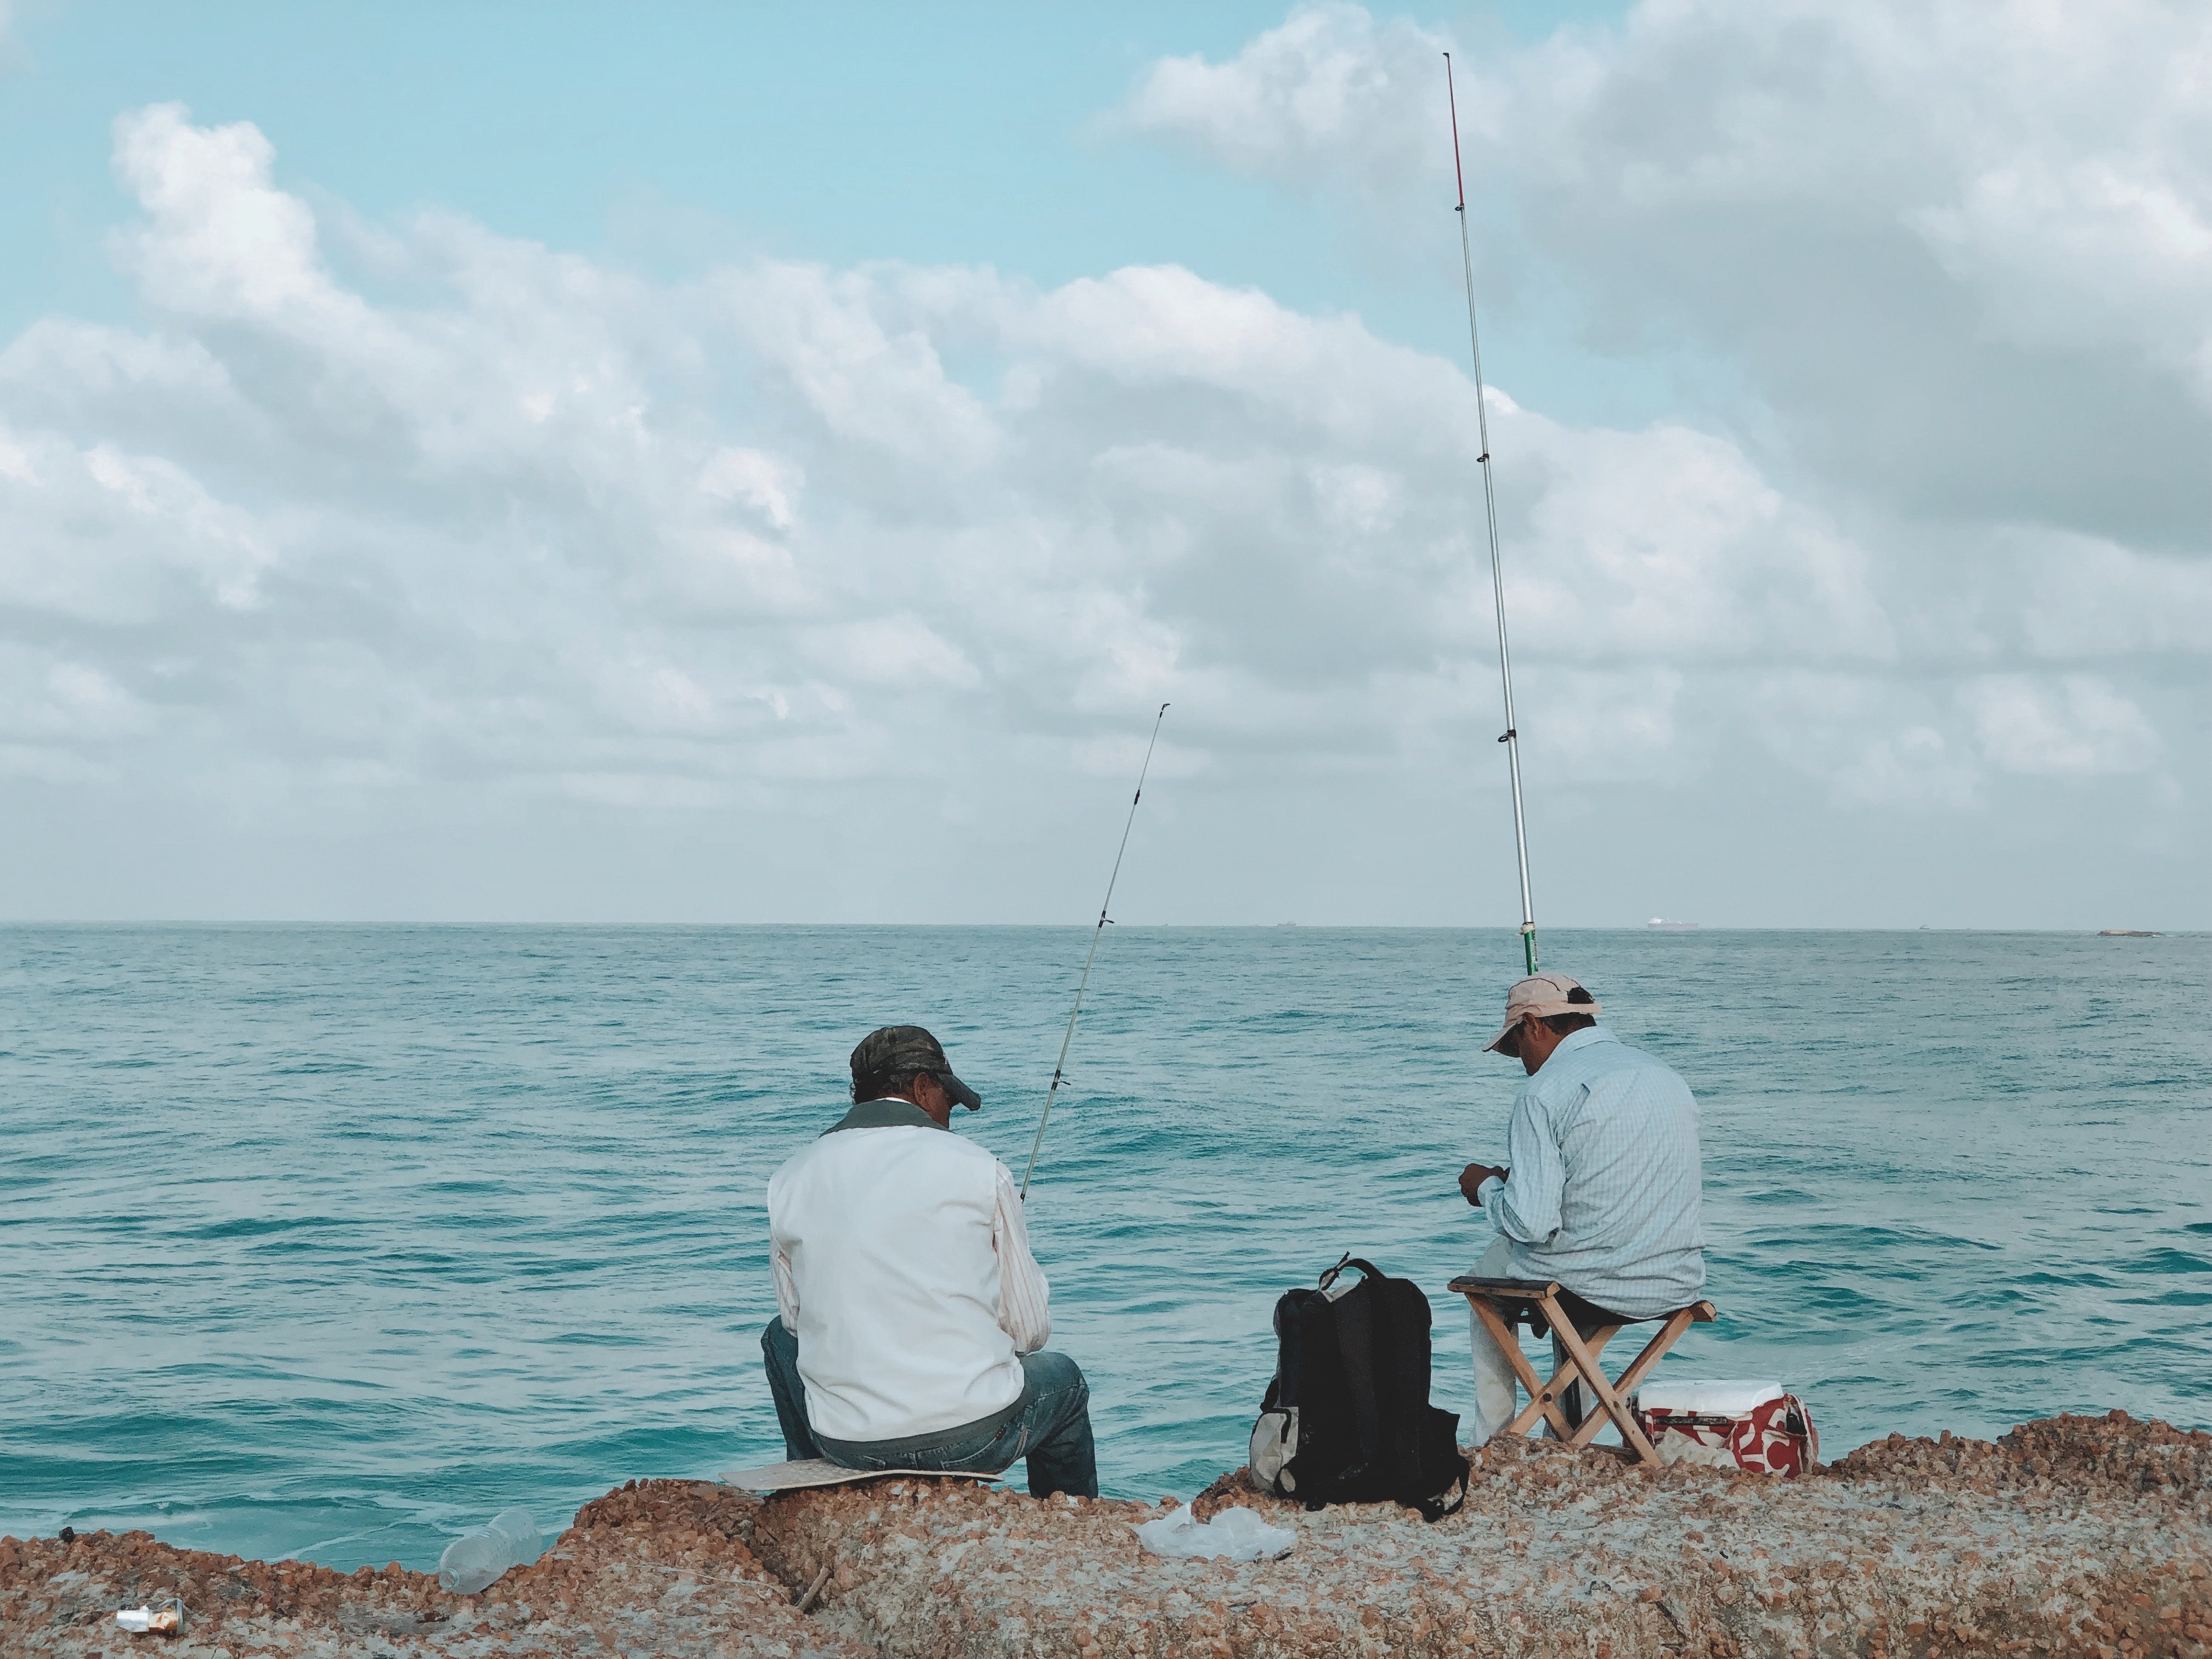 A couple of men fishing by the shore | Source: Unsplash.com